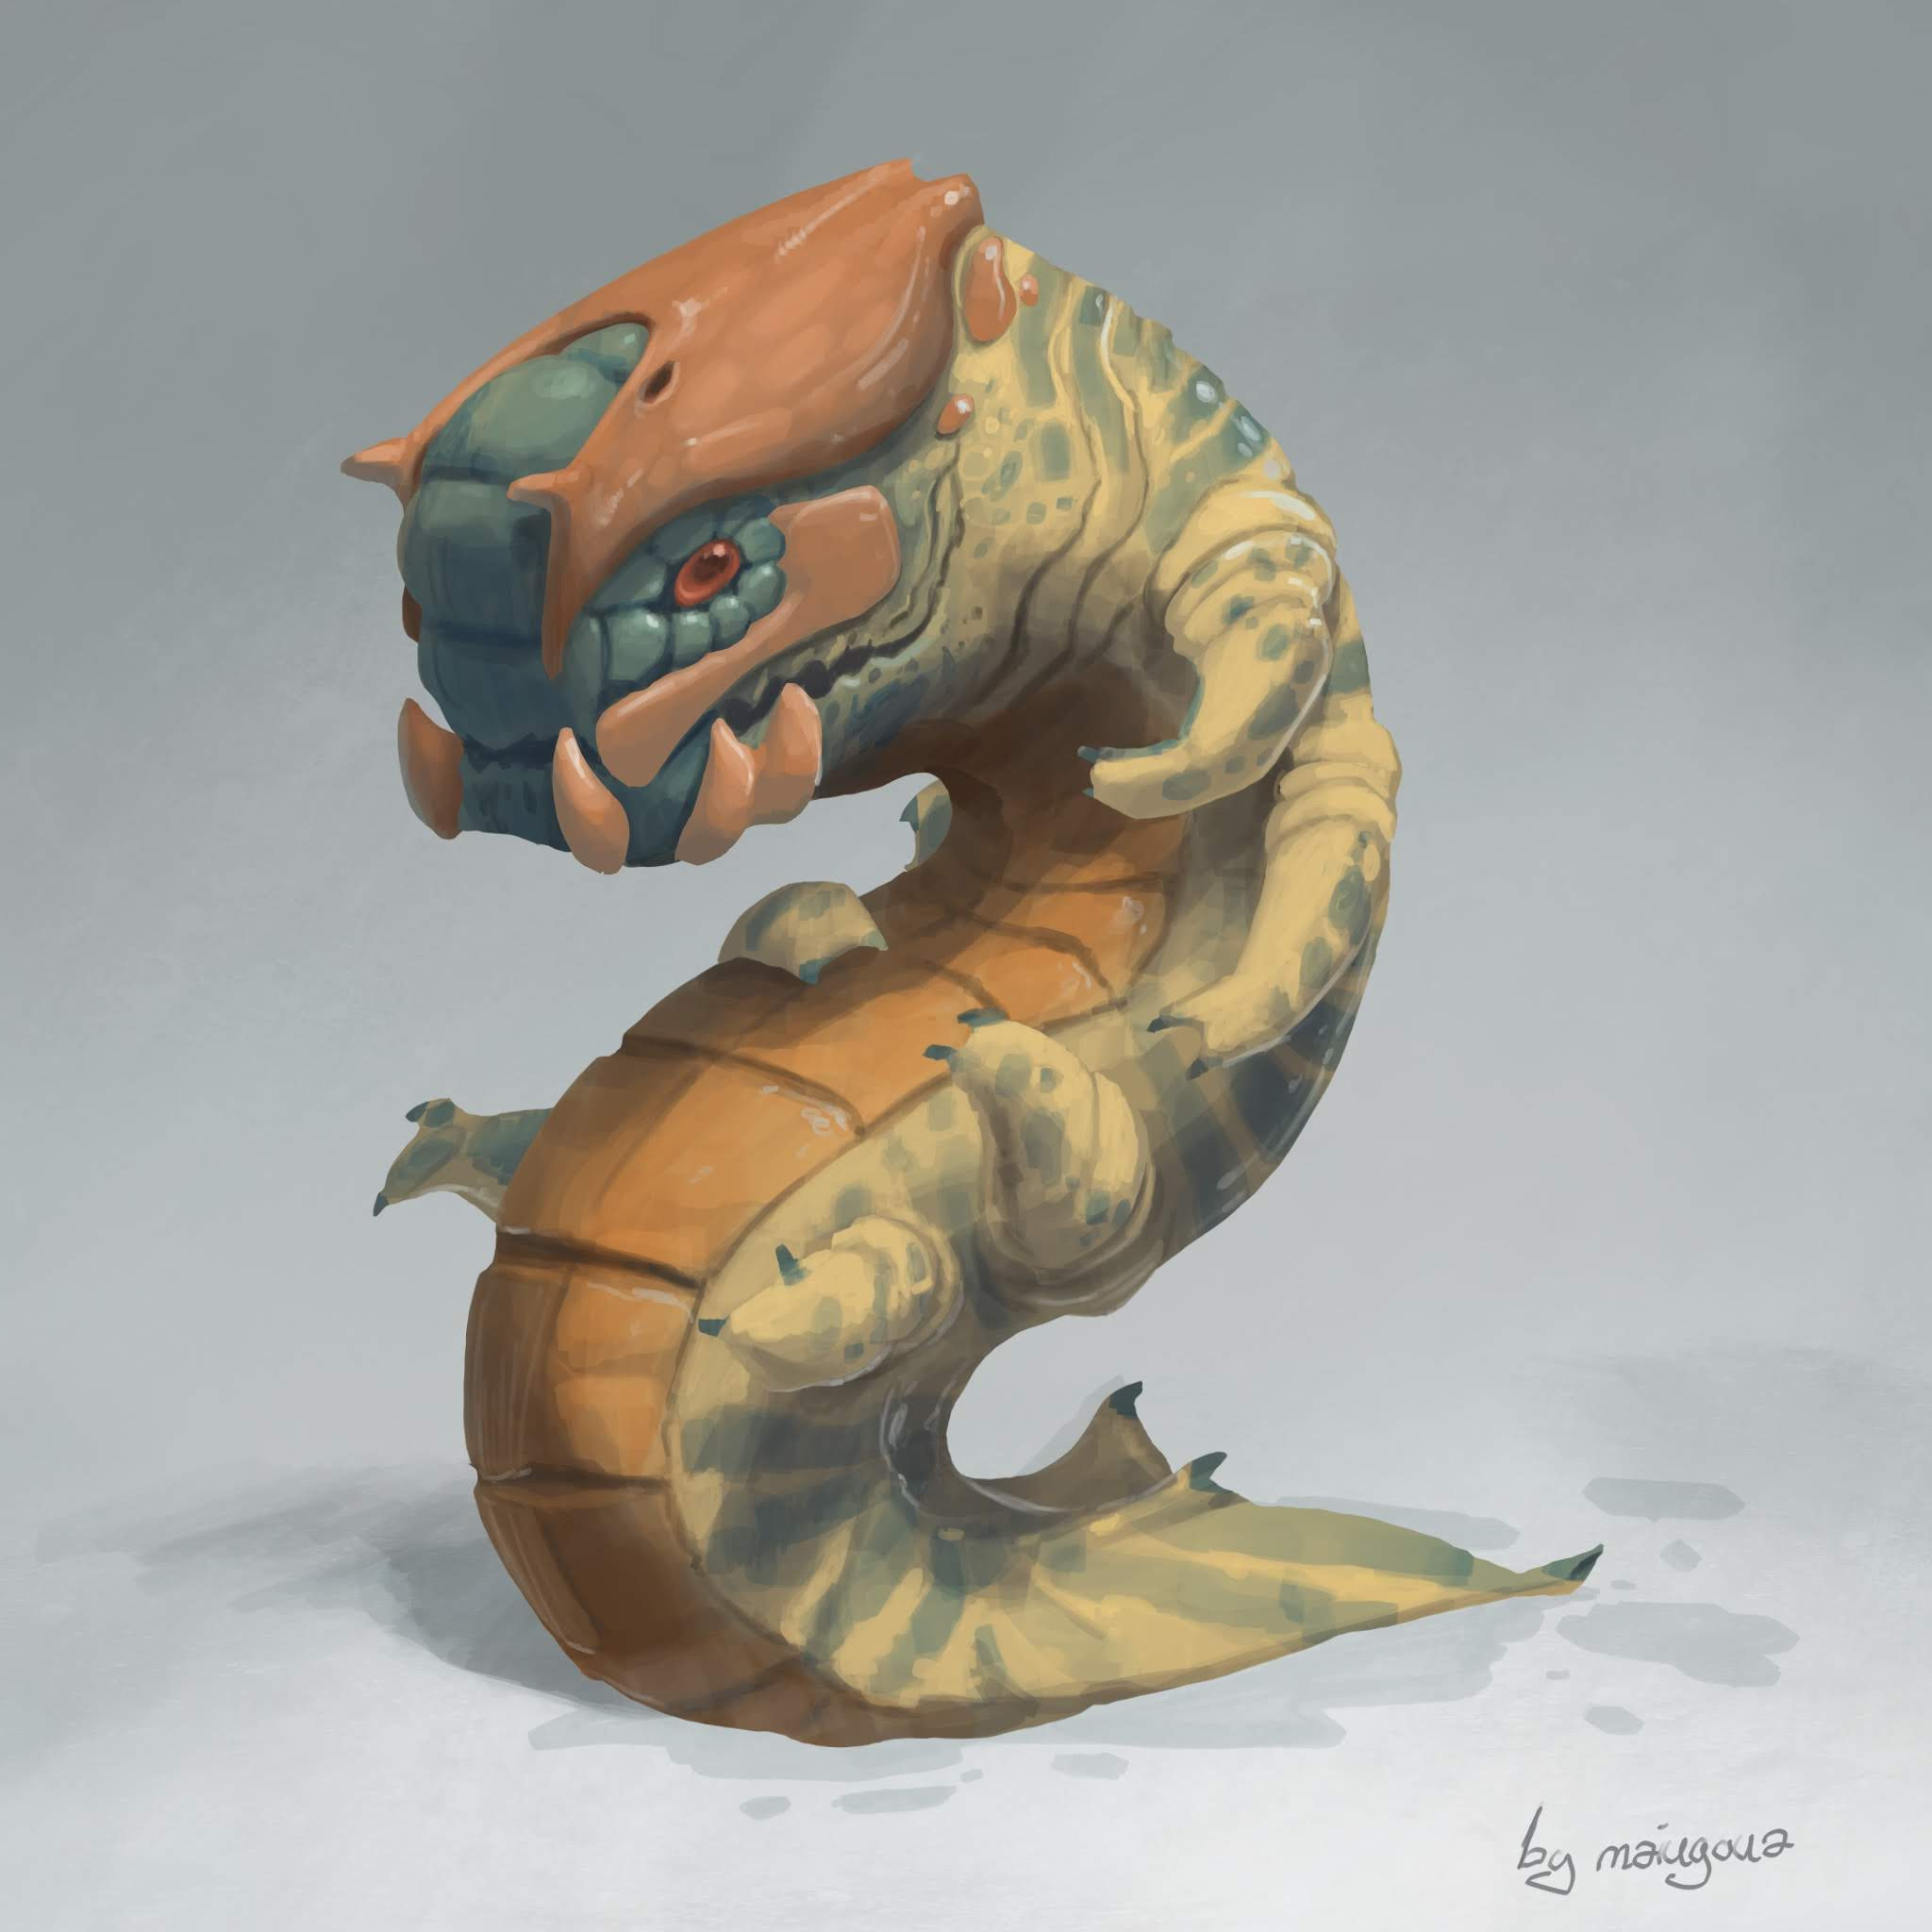 Monster slug concept